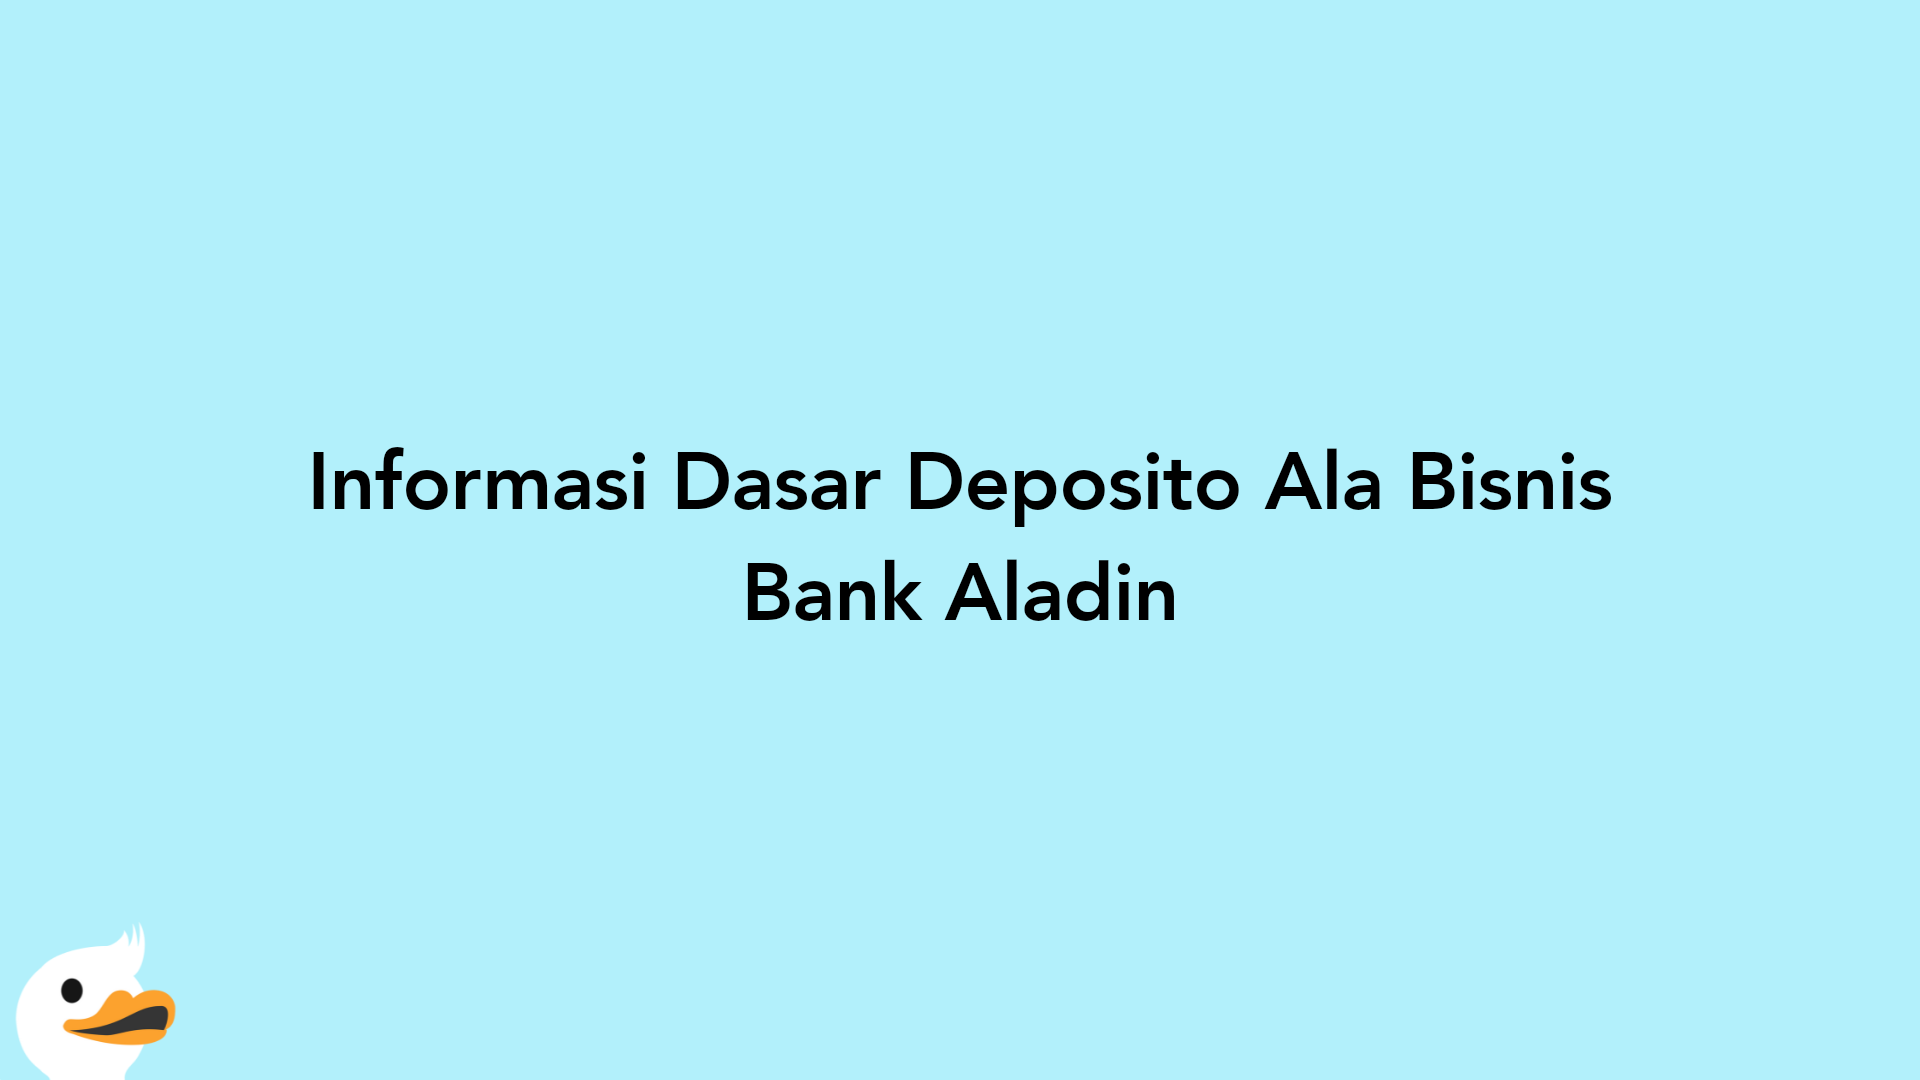 Informasi Dasar Deposito Ala Bisnis Bank Aladin